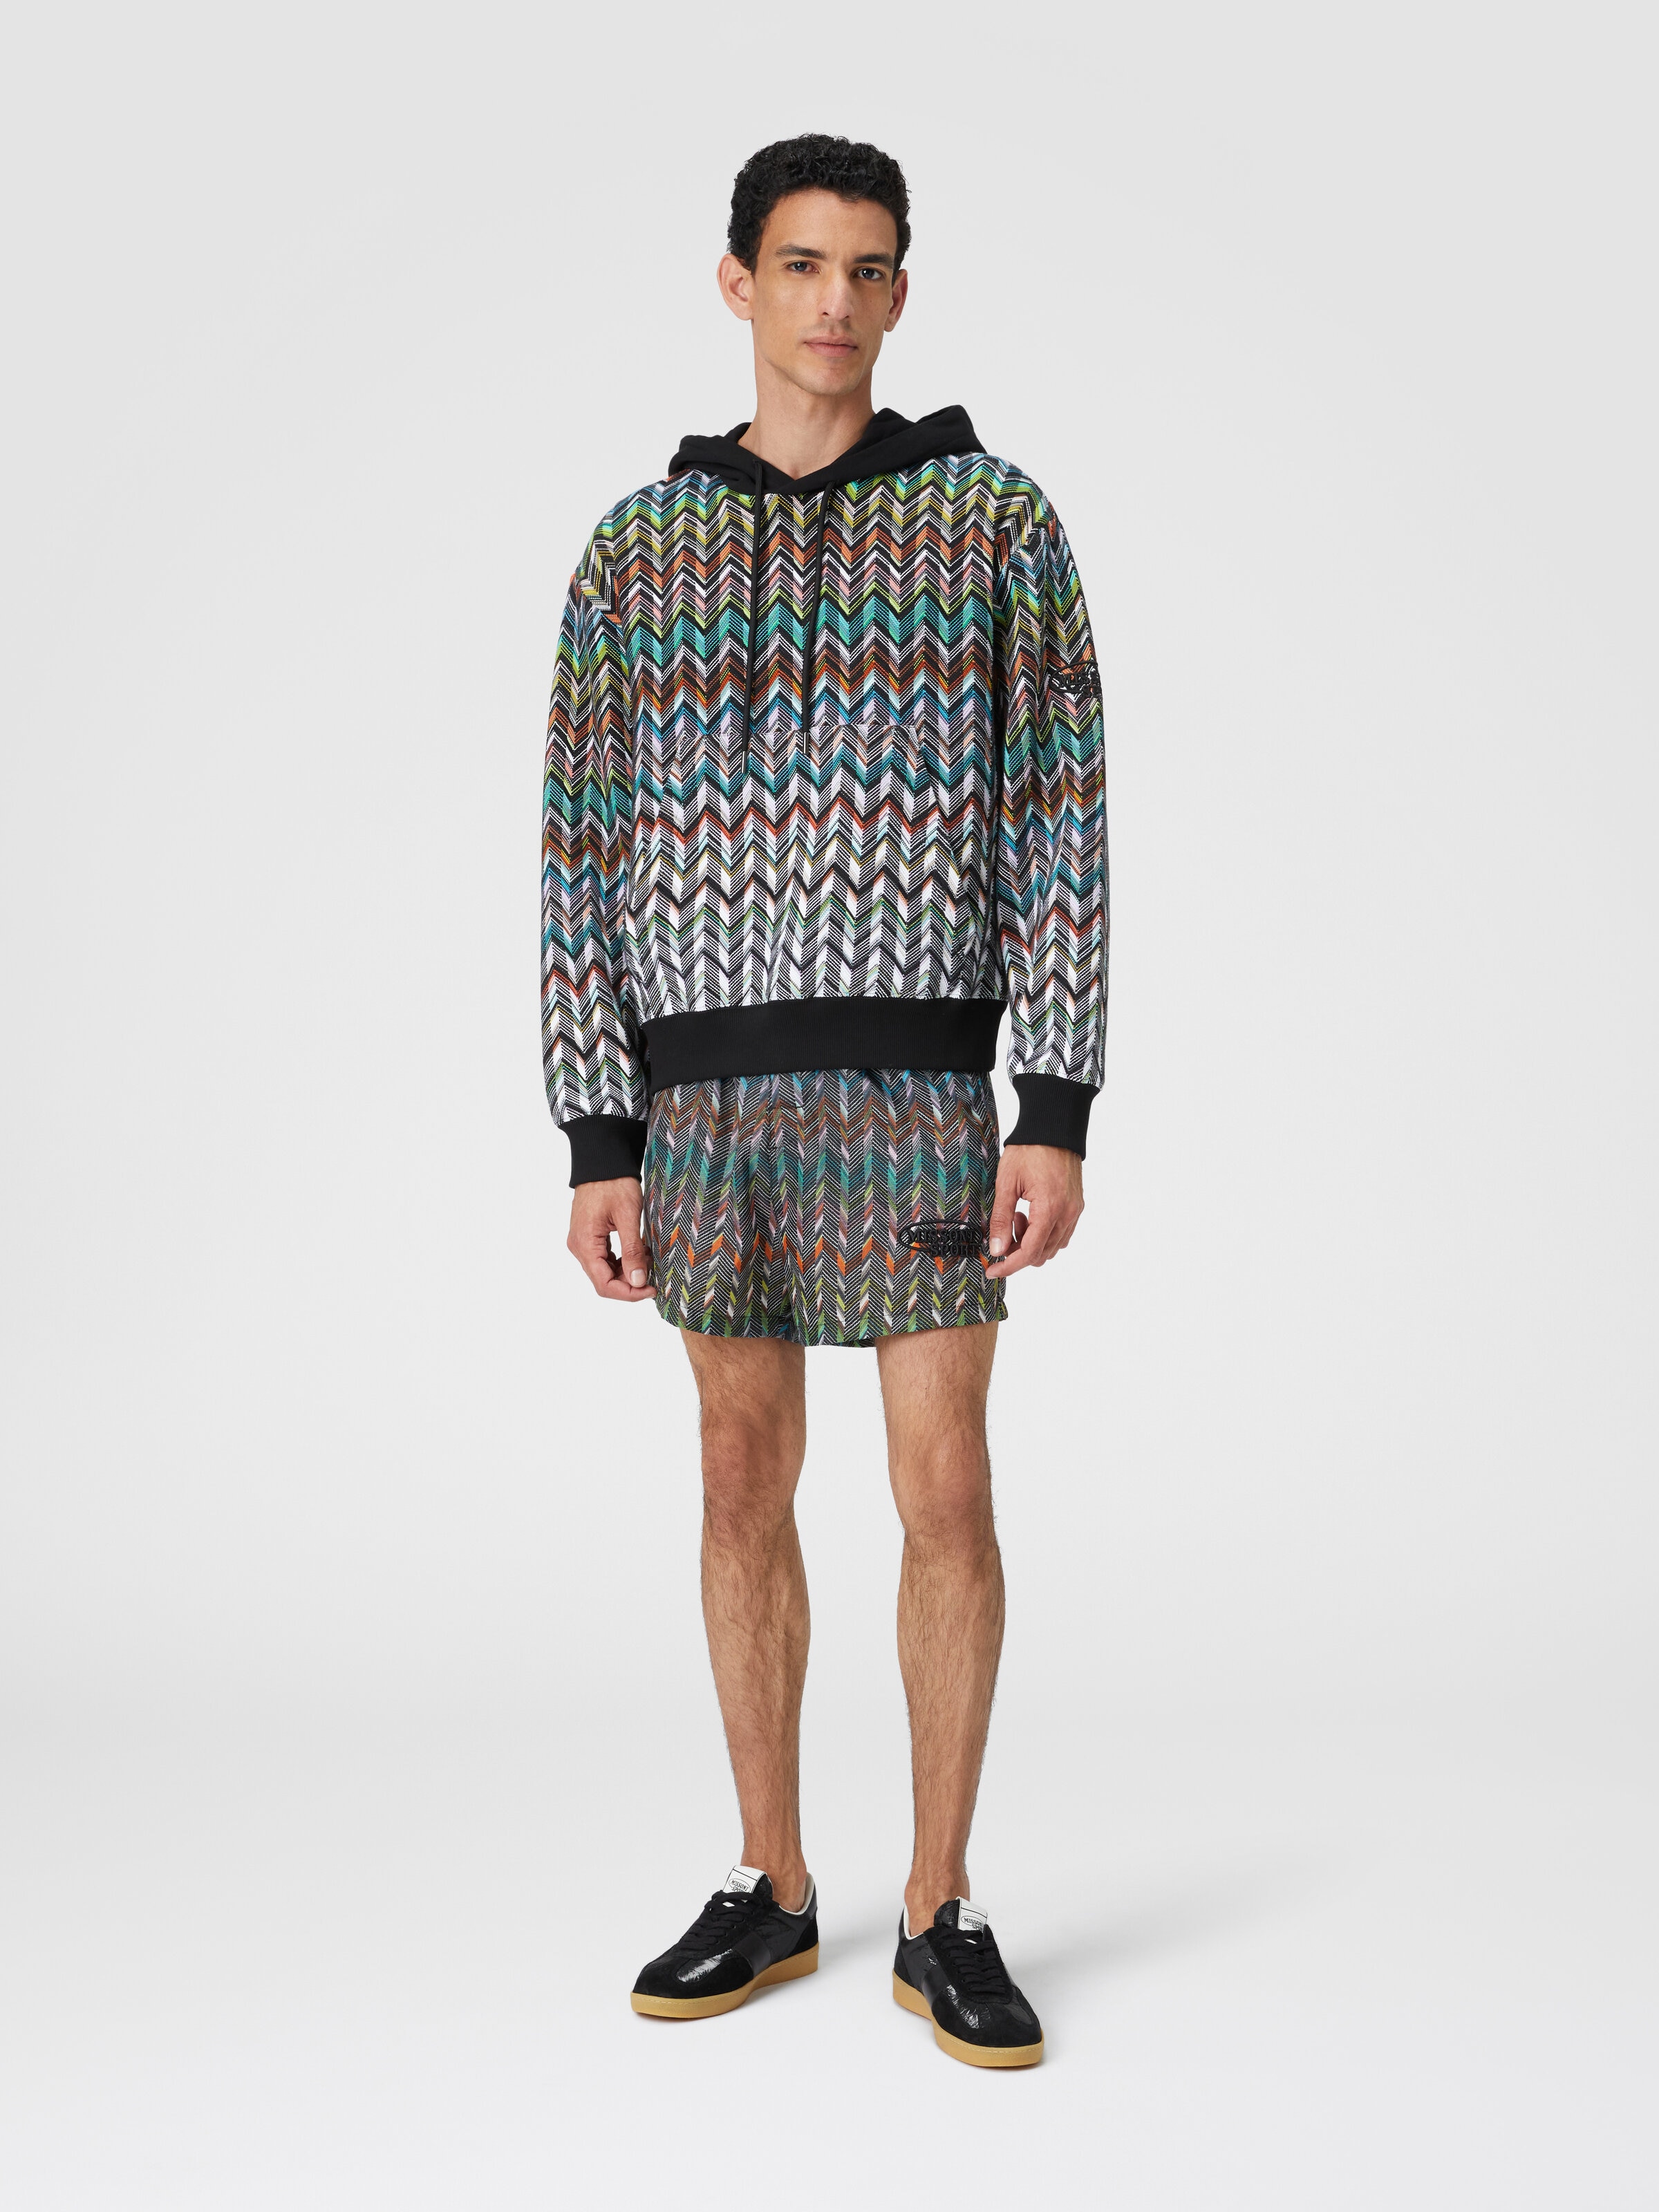 Hooded sweatshirt in zigzag knit , Multicoloured  - 1